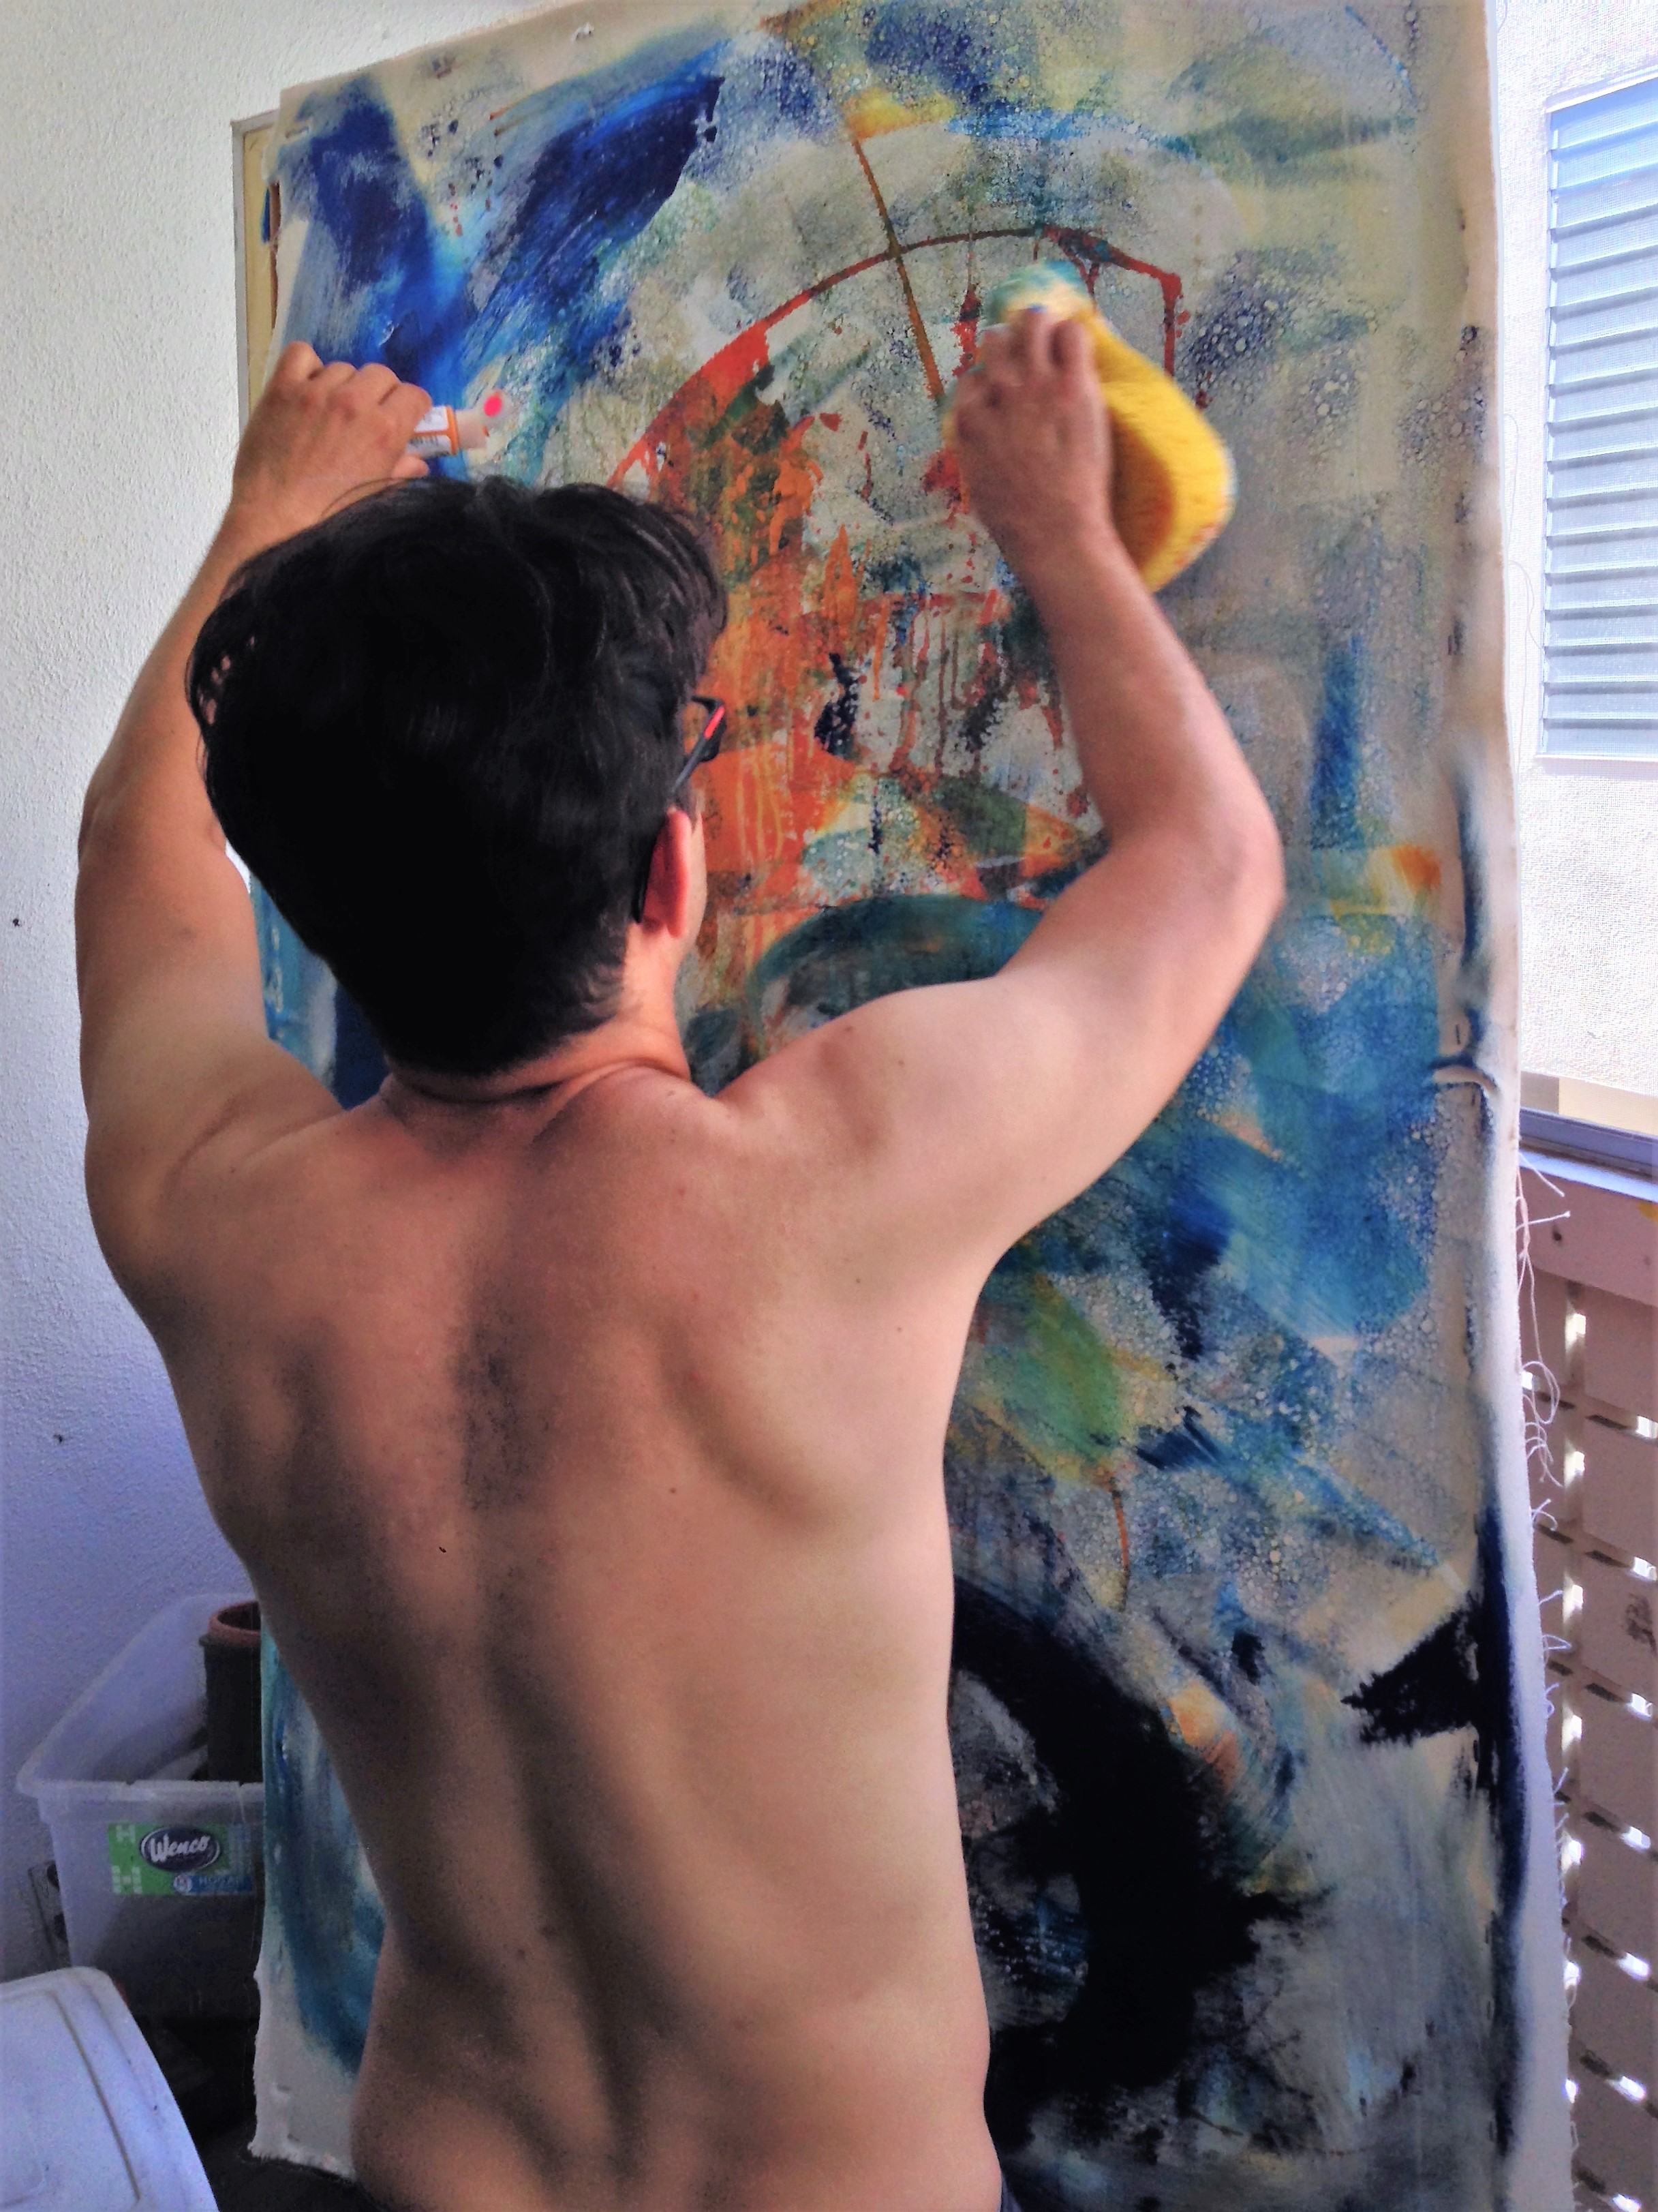 Los Angeles abstract artist - Nestor Toro in his West Hollywood studio